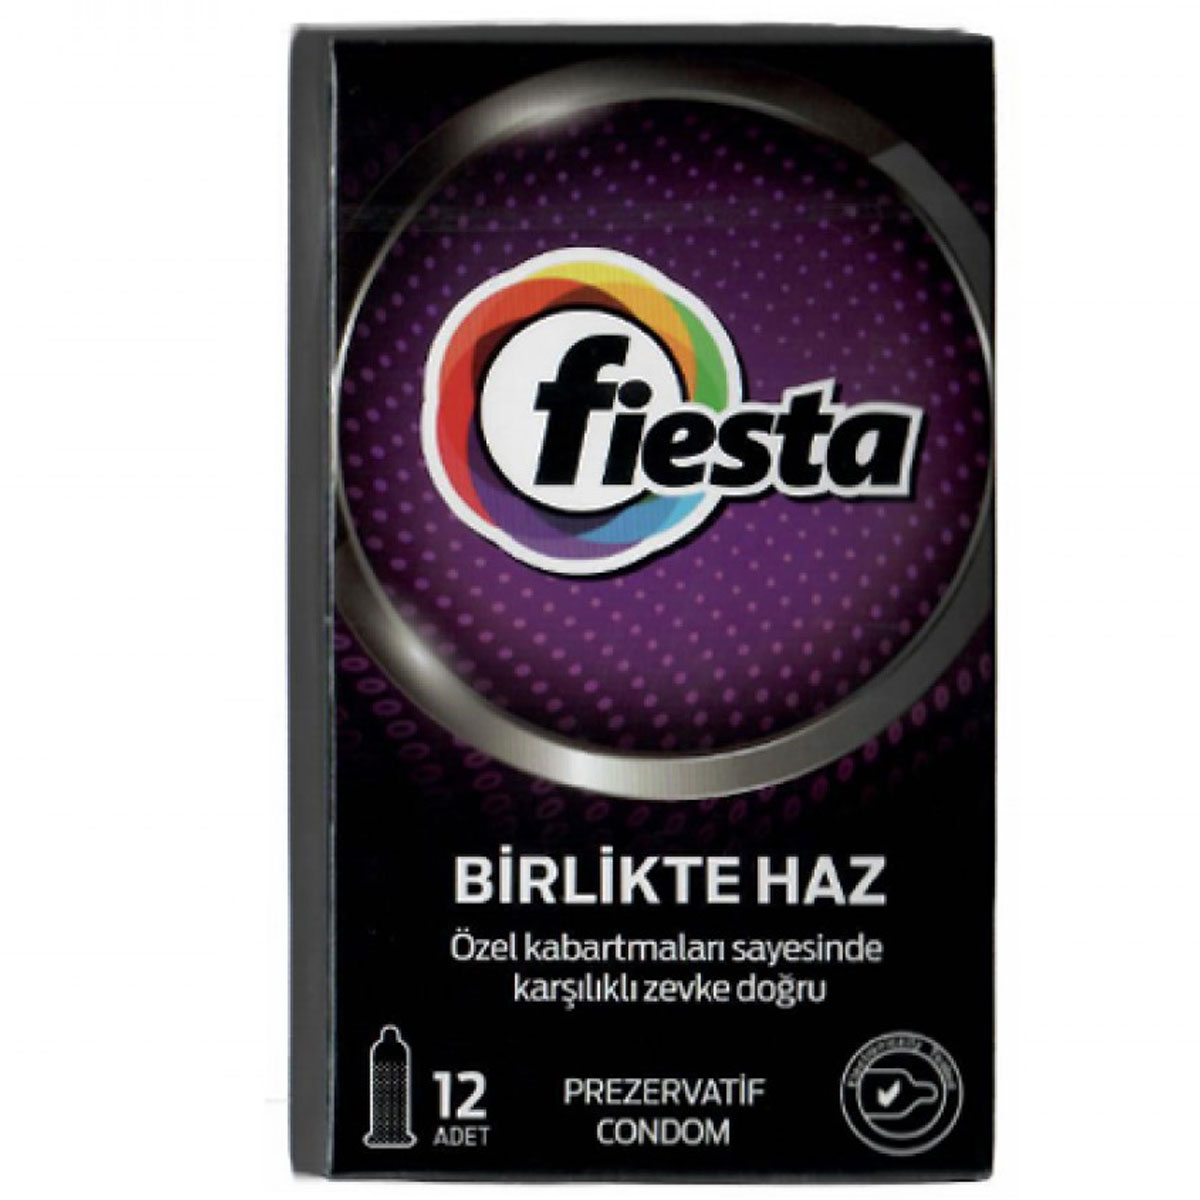 Fiesta Benekli Kabartmal Prezervatif C-1589